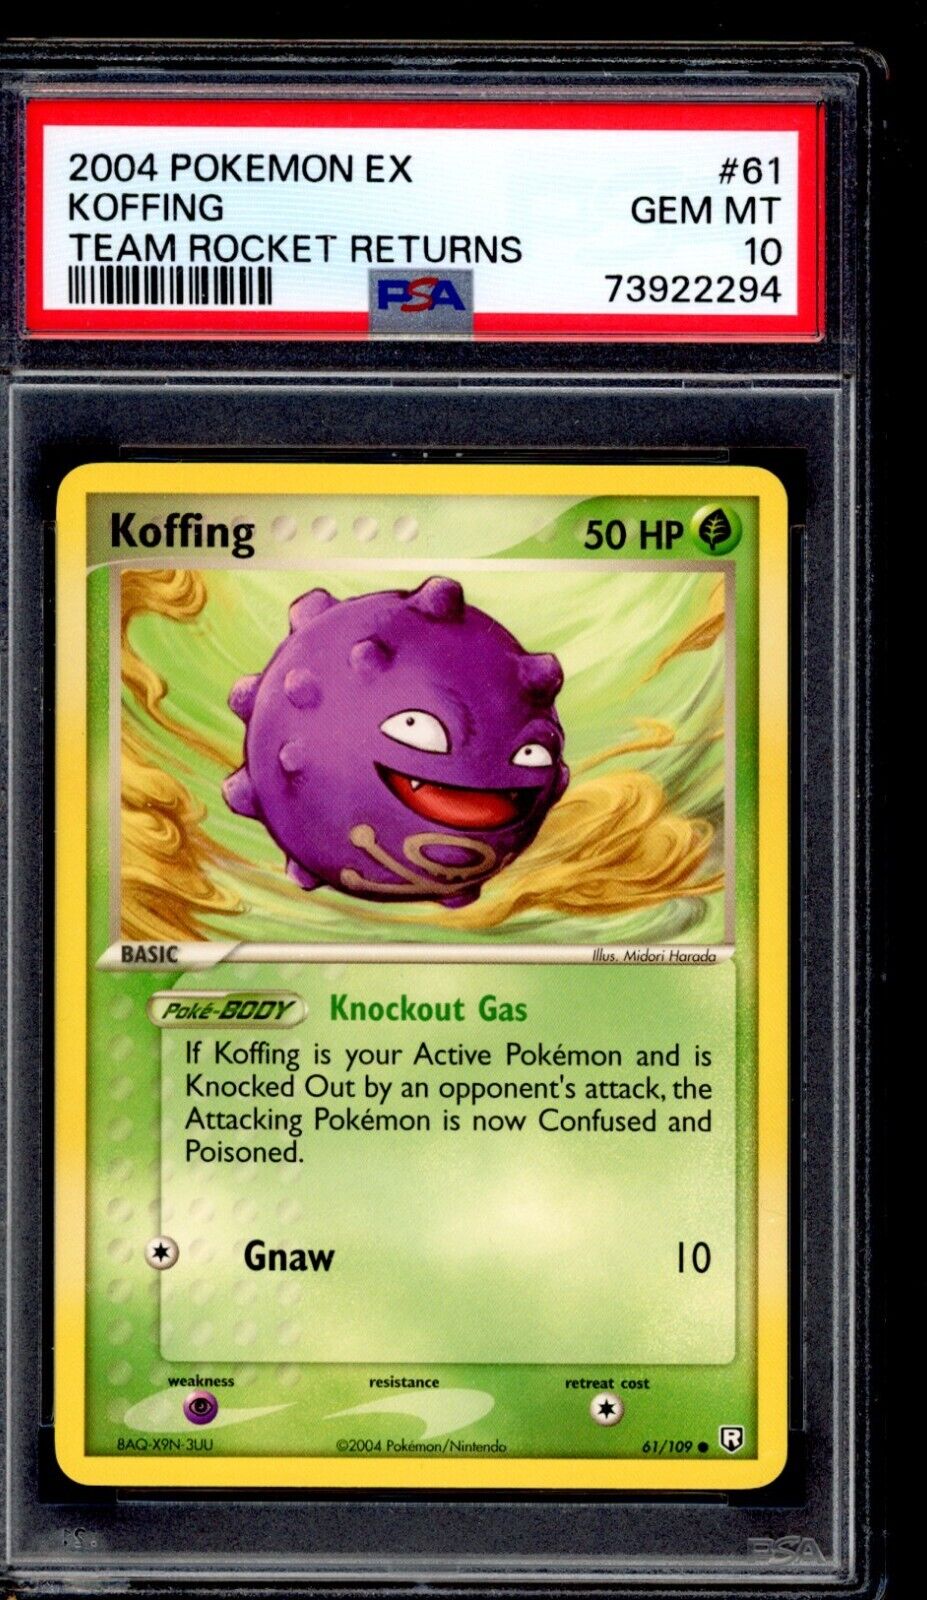 PSA 10 Koffing 2004 Pokemon Card 61/109 Team Rocket Returns